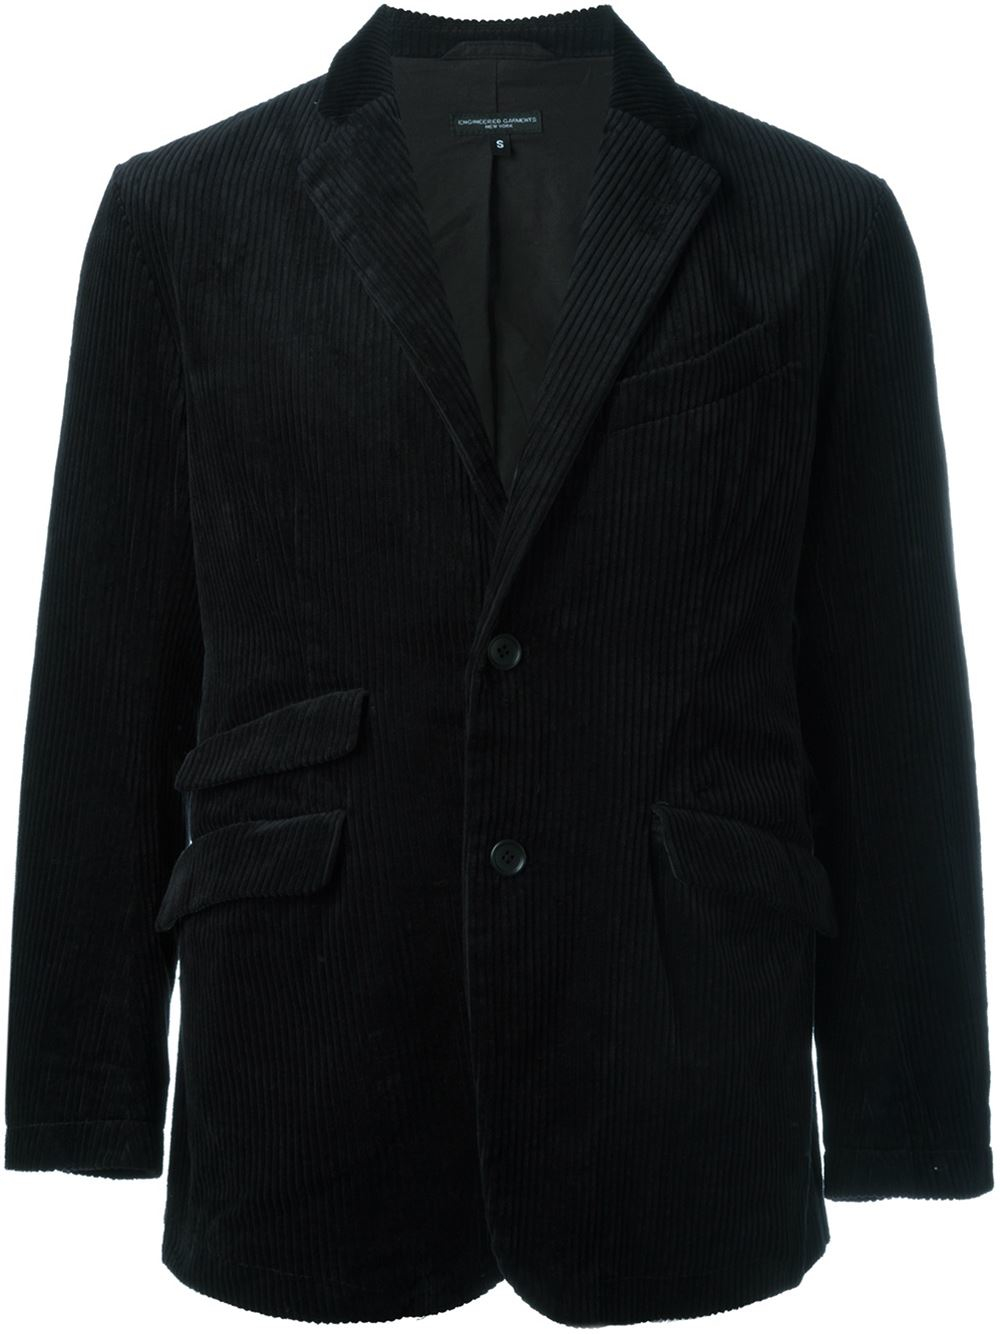 Lyst - Engineered Garments Corduroy Blazer in Black for Men